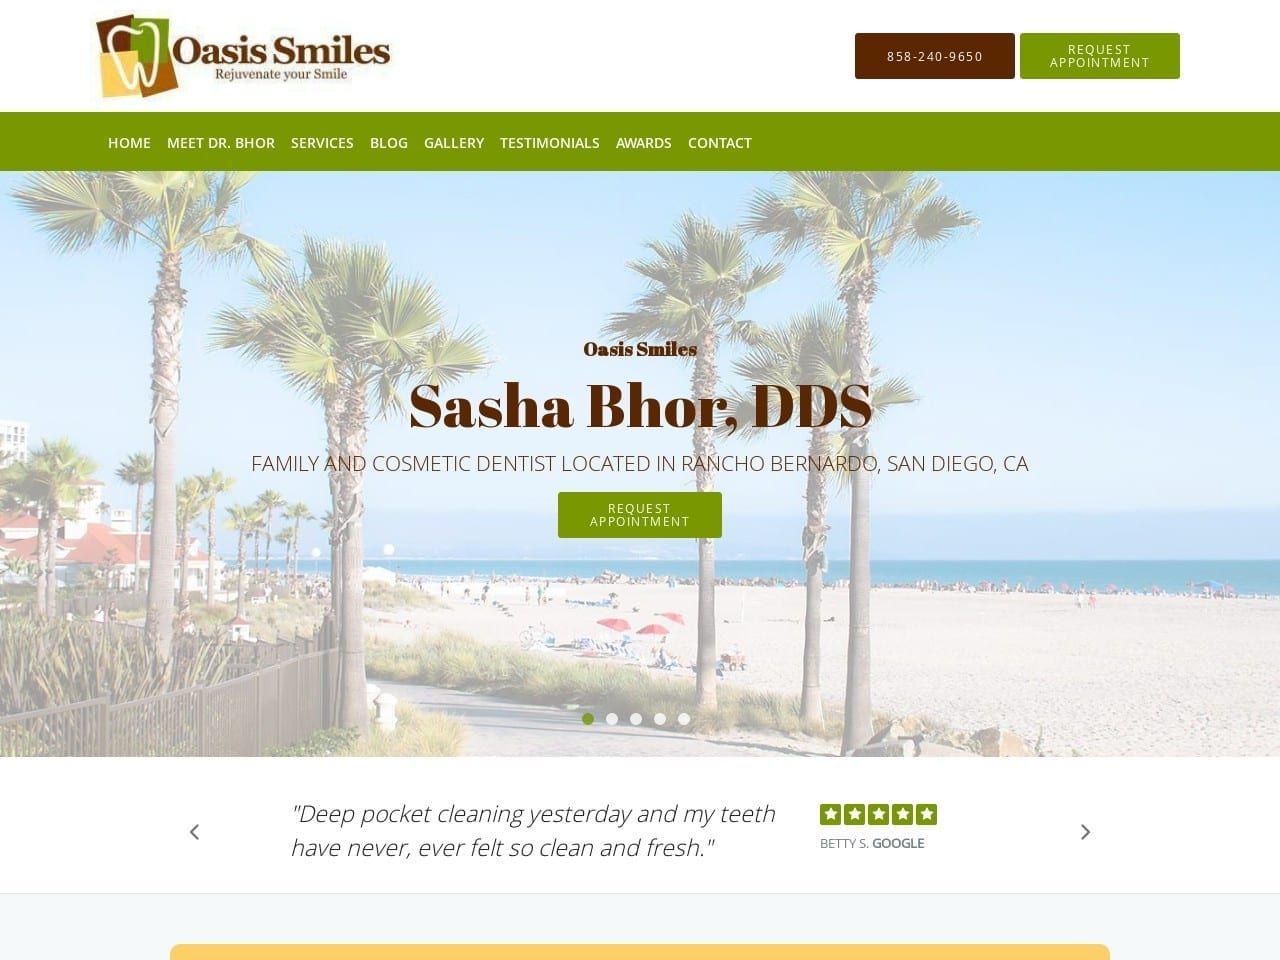 Symphony Dental Group Website Screenshot from oasissmiles.com